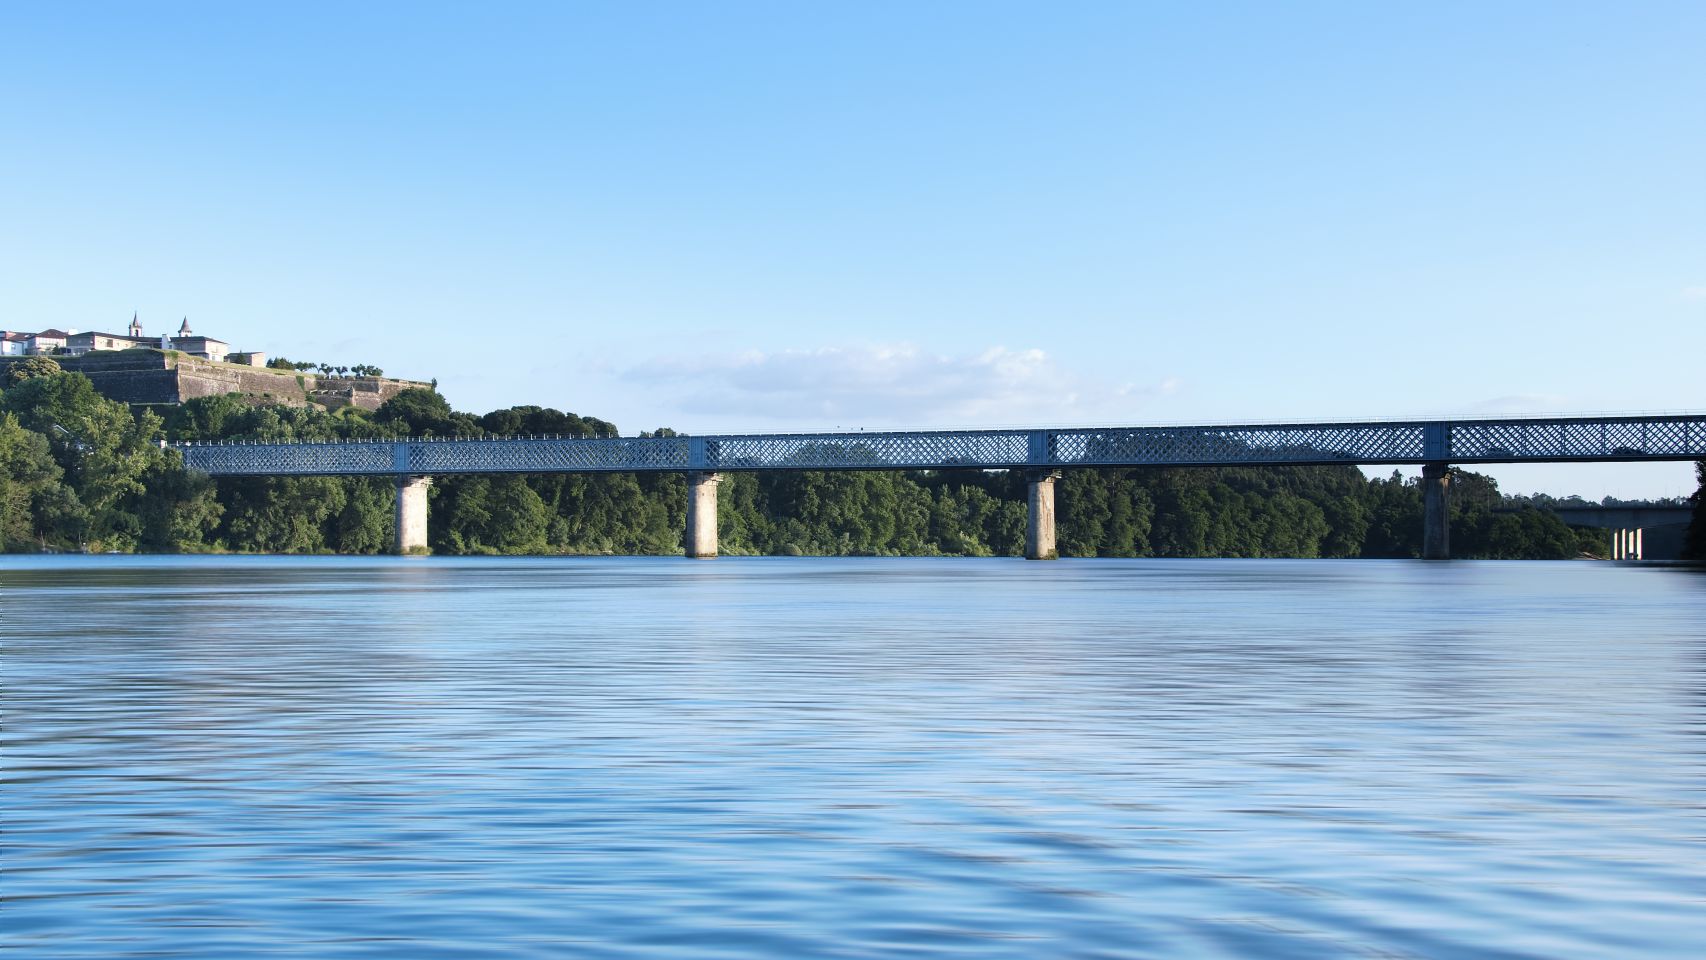 Puente internacional Tui-Valença.